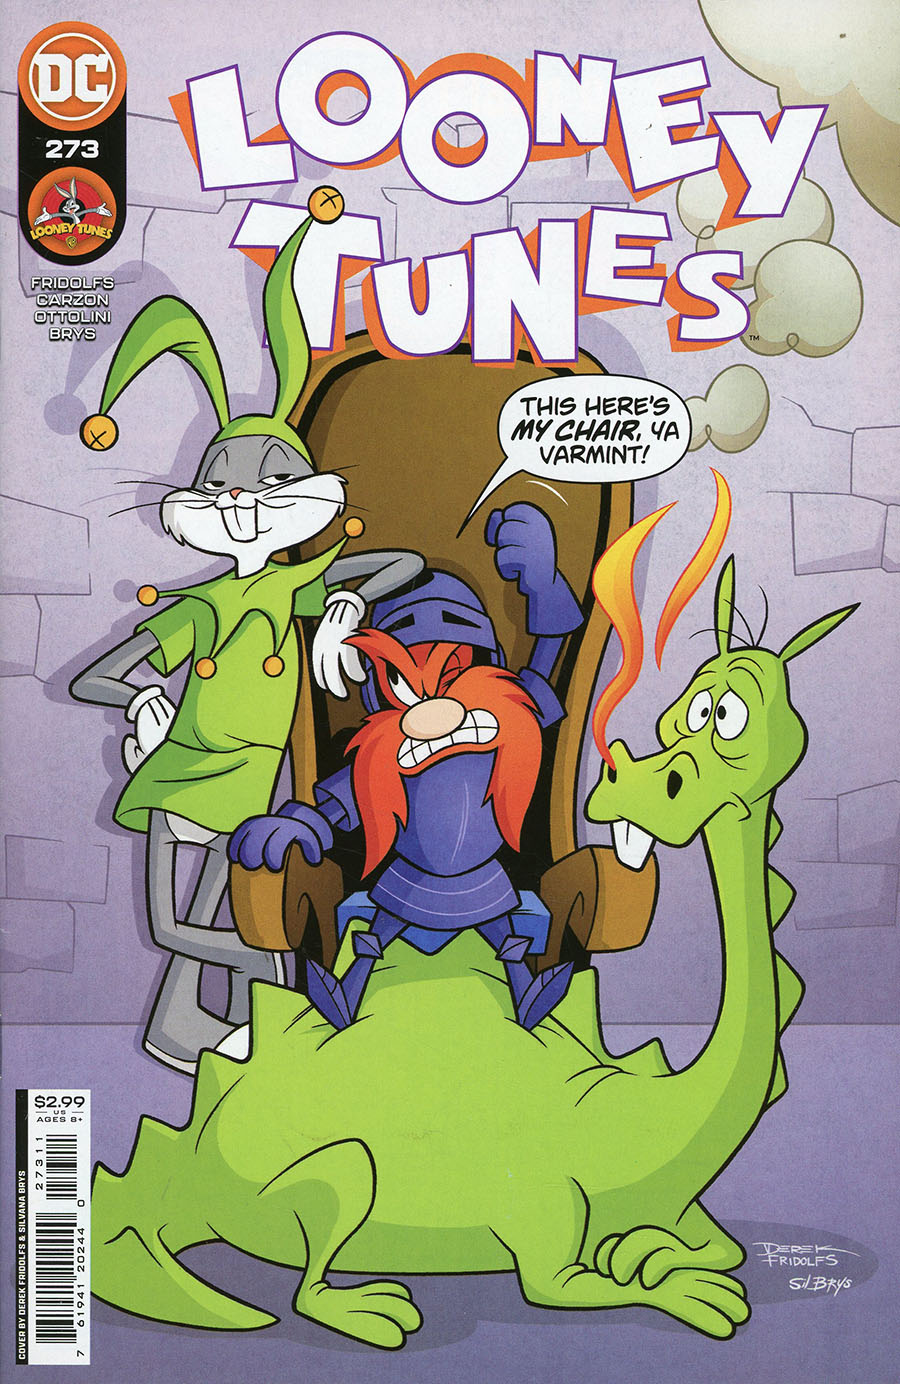 Looney Tunes Vol 3 #273